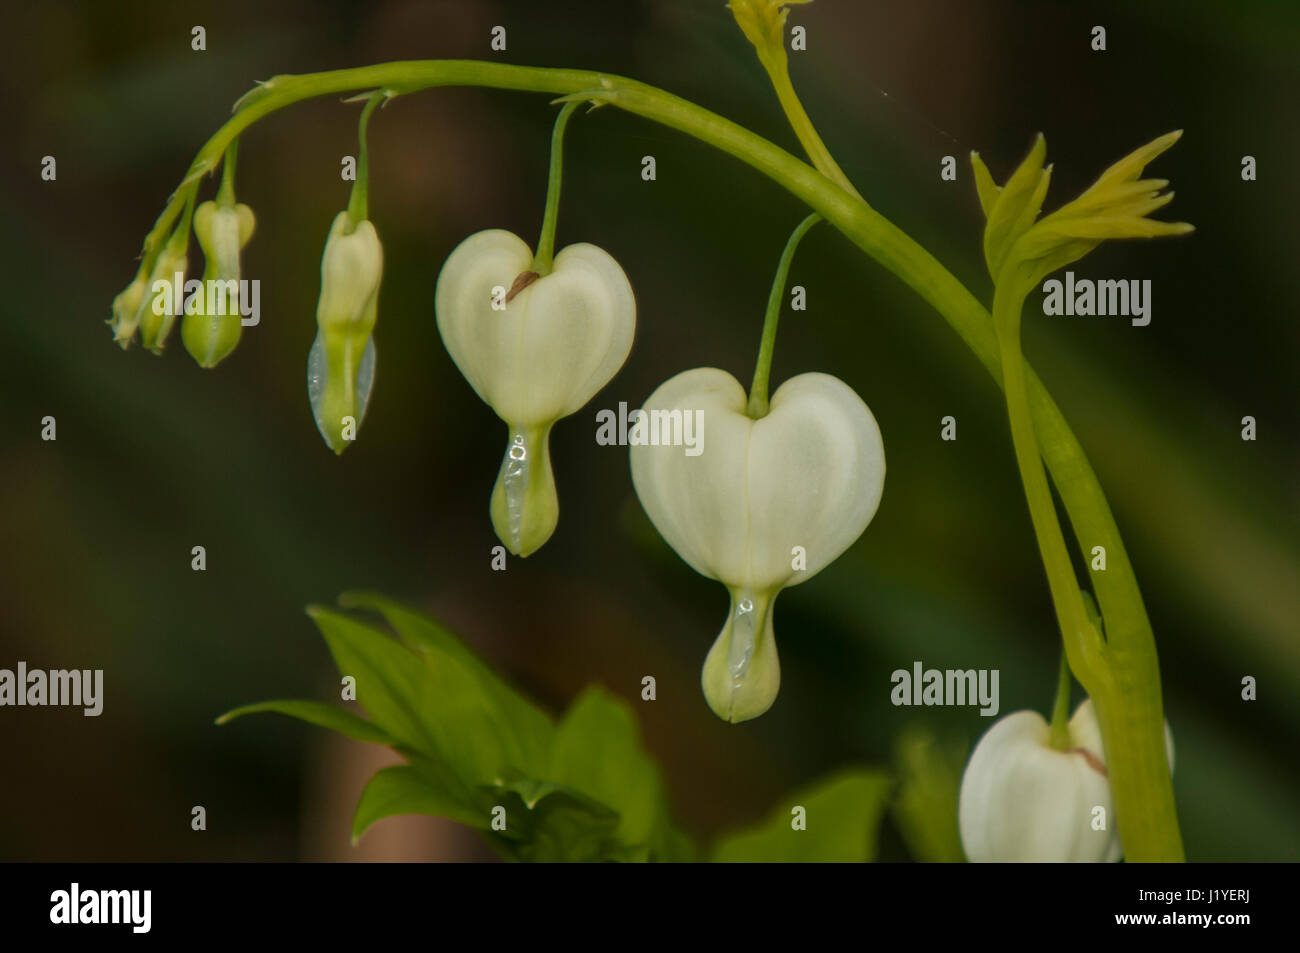 White bleeding heart flowers, Dicentra spectabilis, on an aching stem Stock Photo